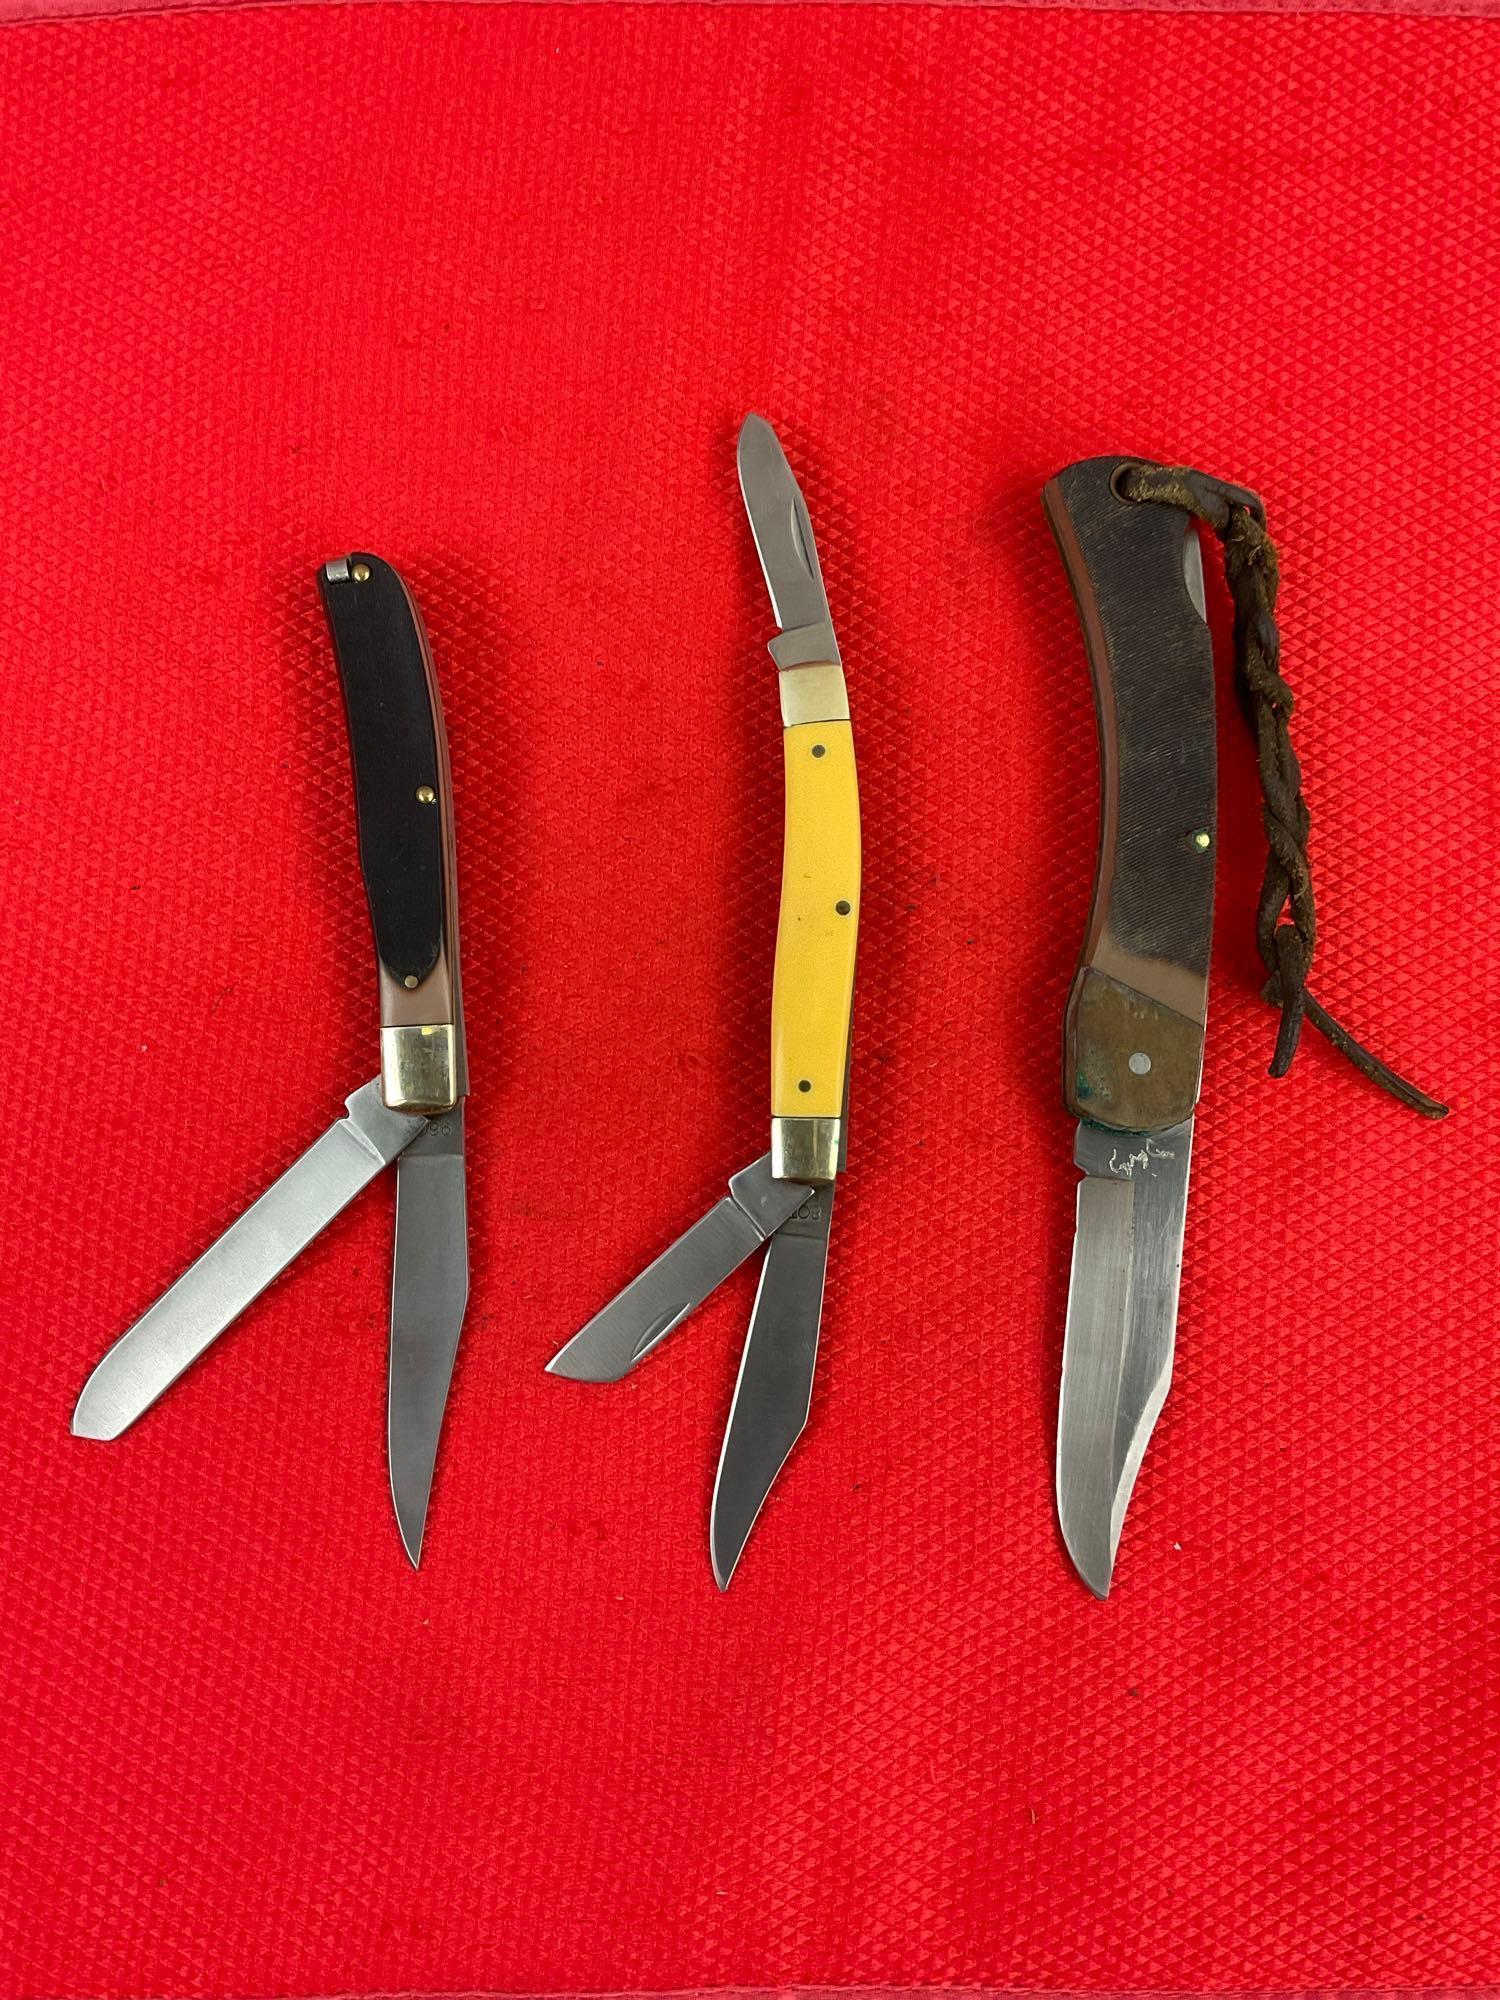 3 pcs Schrade Old Timer Steel Folding Blade Pocket Knives Models 6OT, 8OTY, 96OT. See pics.